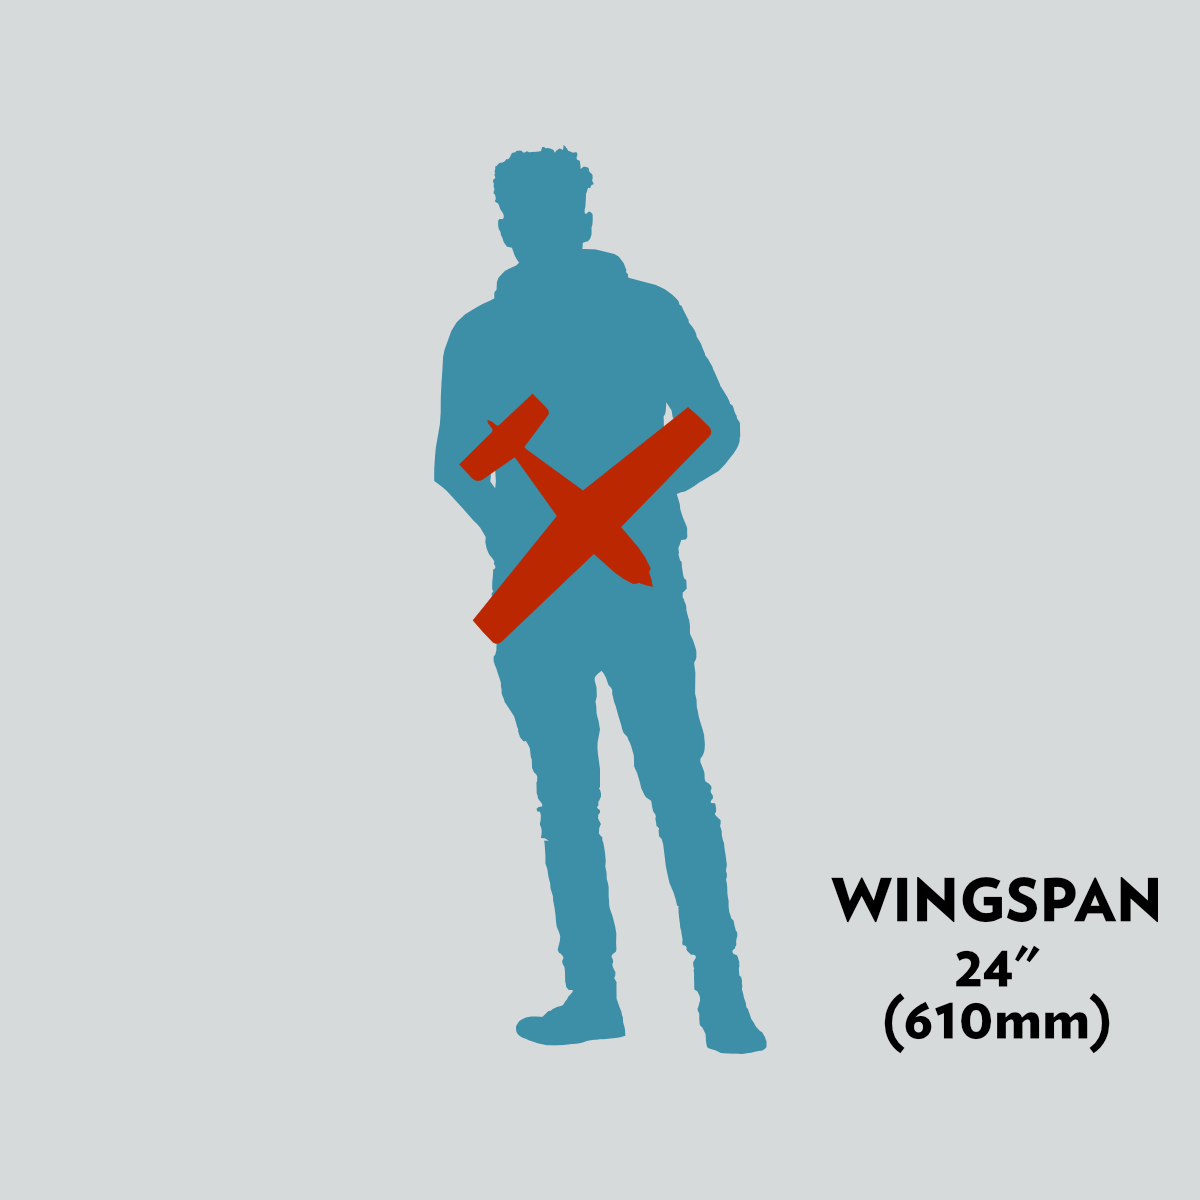 24" (610mm) wingspan